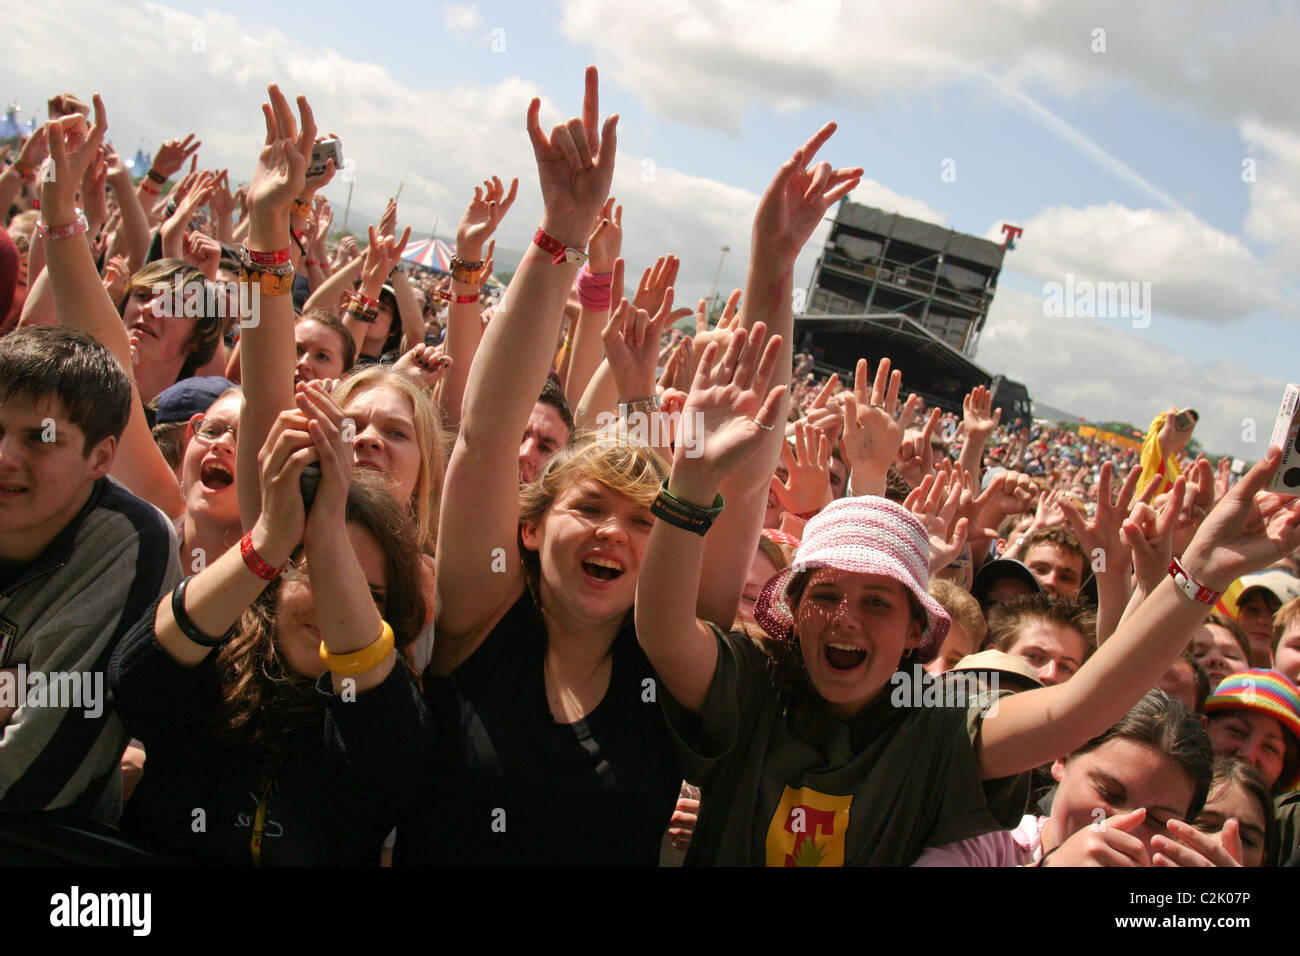 'T In The Park' annual music festival, at Balado, in Scotland. Stock Photo